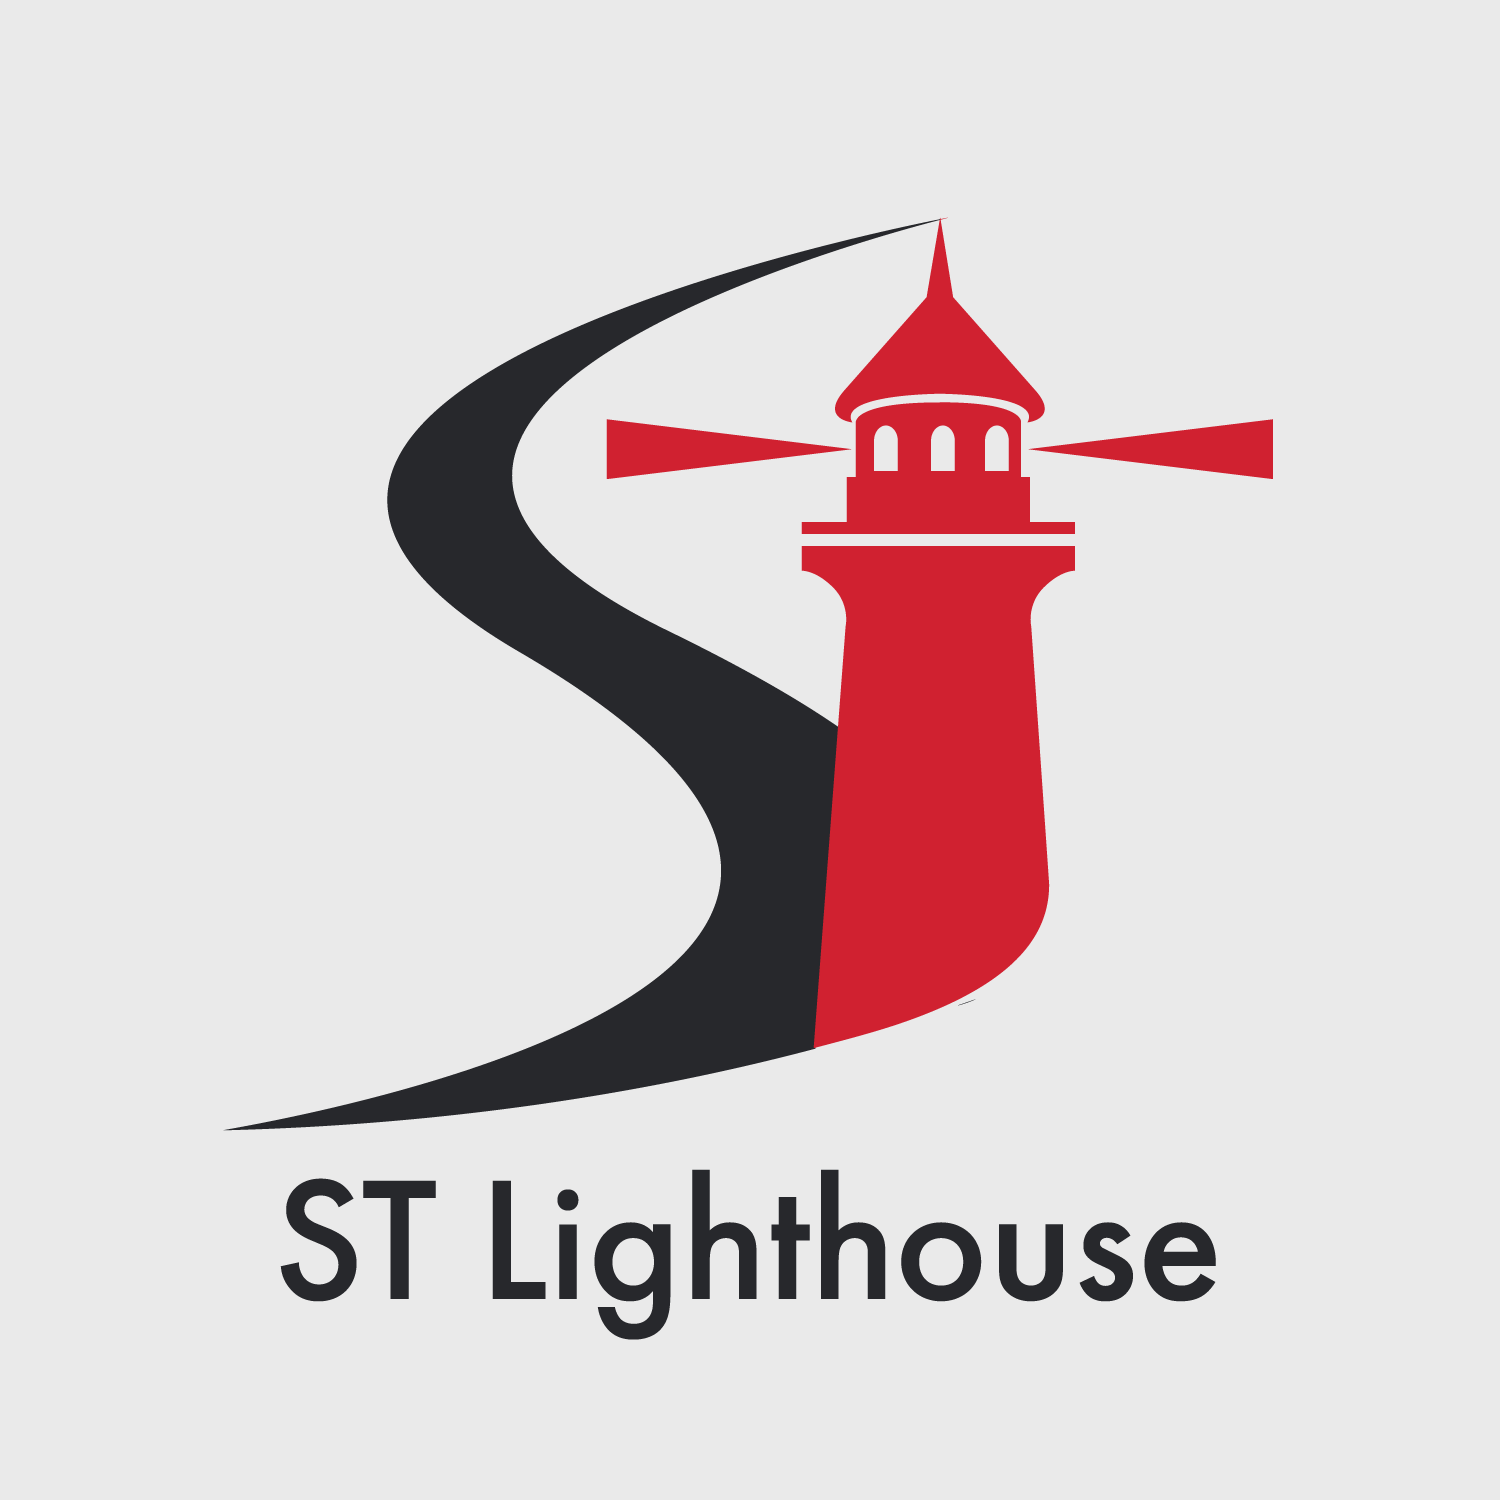 ST-lighthouse----LOGO